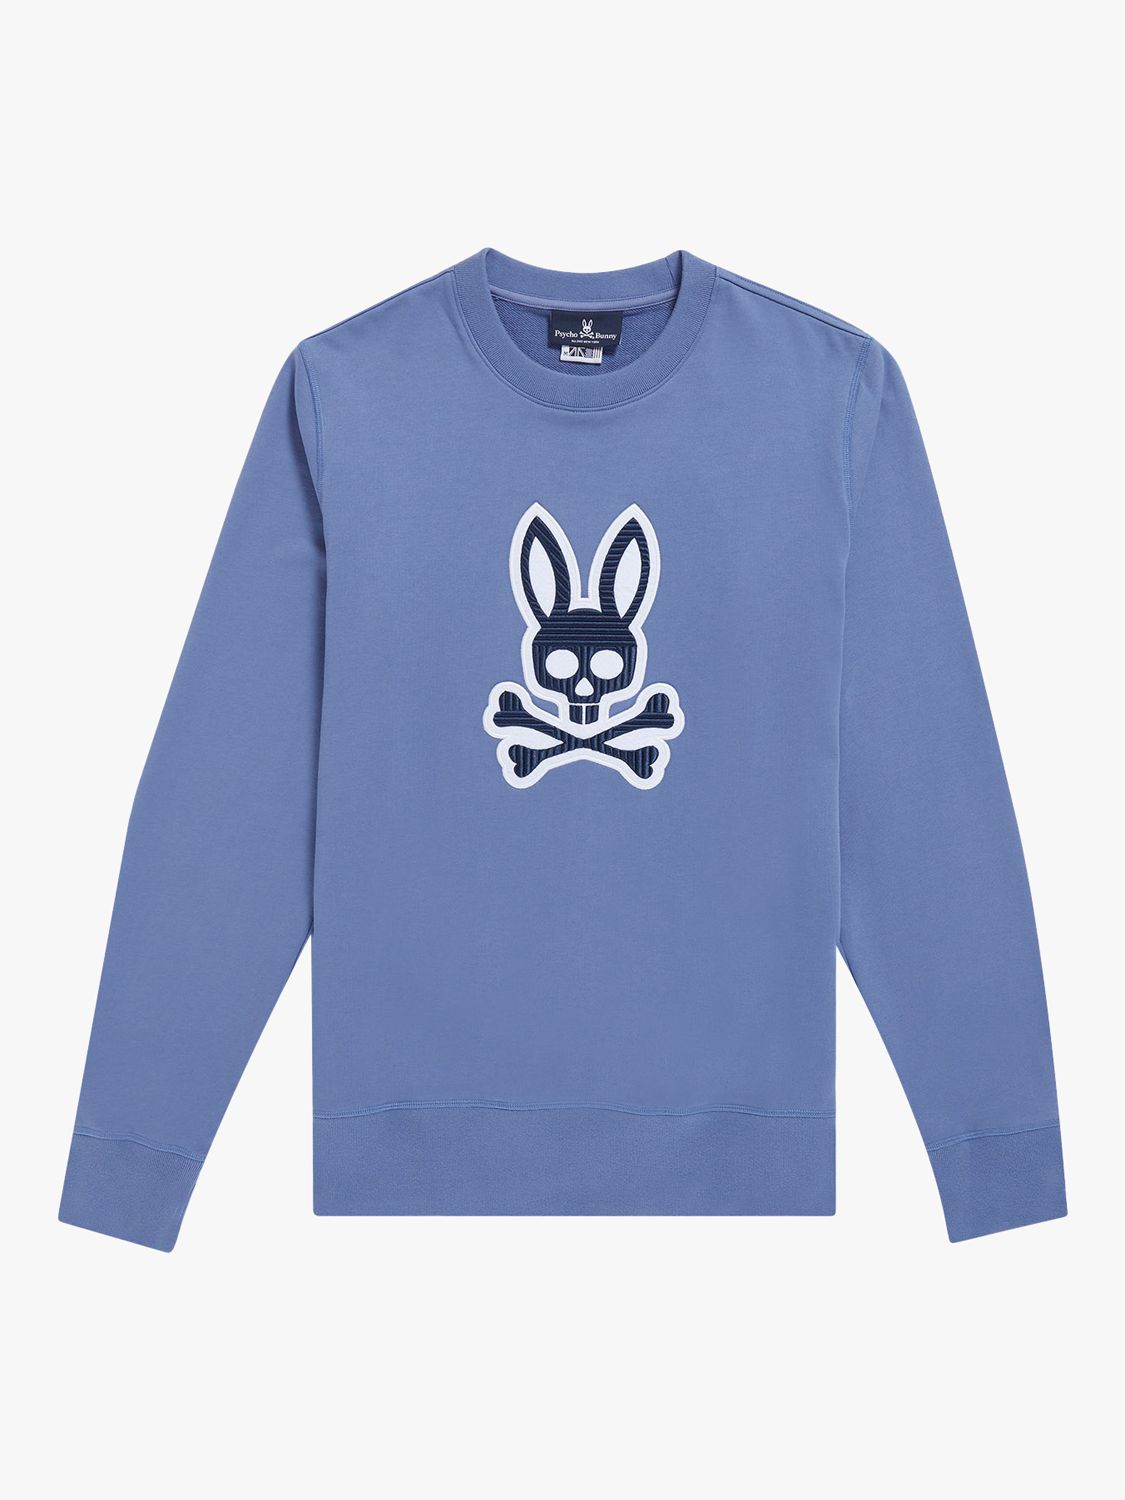 Psycho Bunny Logo Sweatshirt, Bal Harbour at John Lewis & Partners